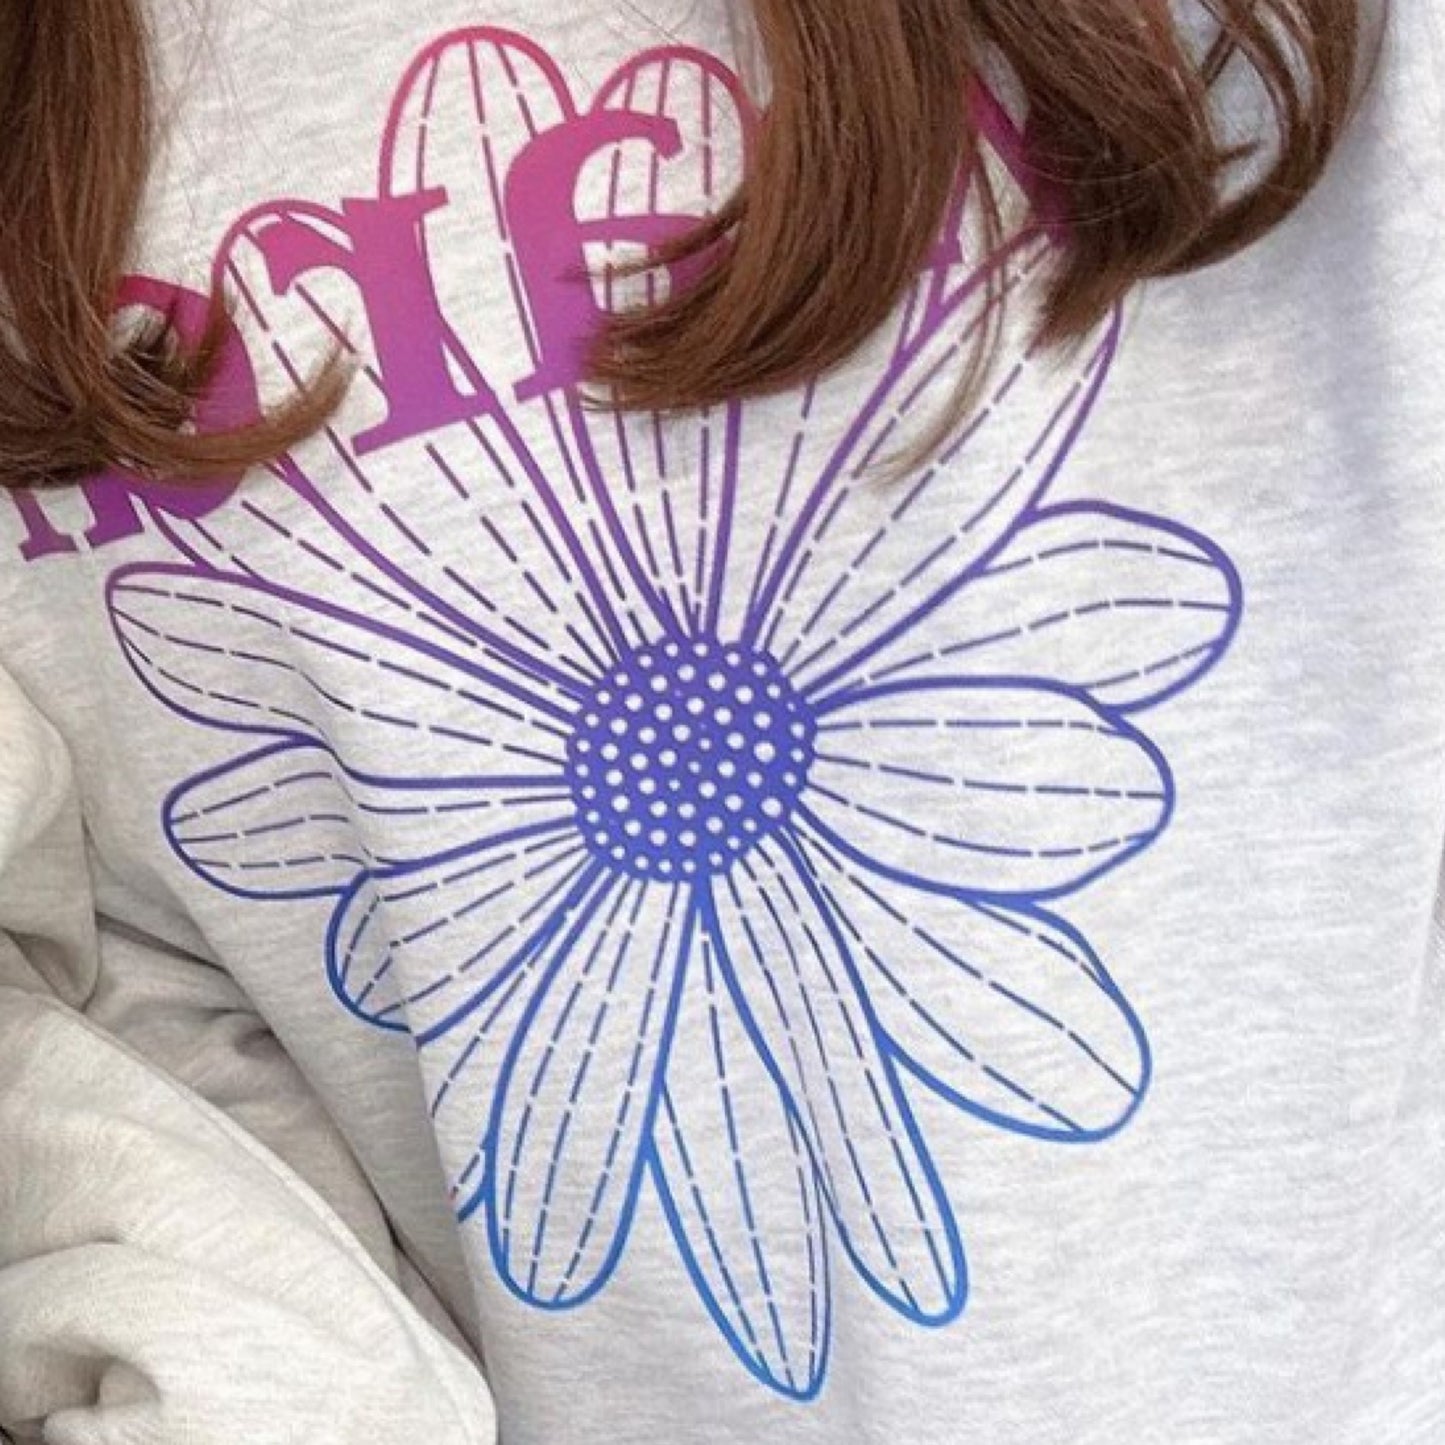 Mardi Mercredi (Flowermardi Gradation) Sweatshirt 2023